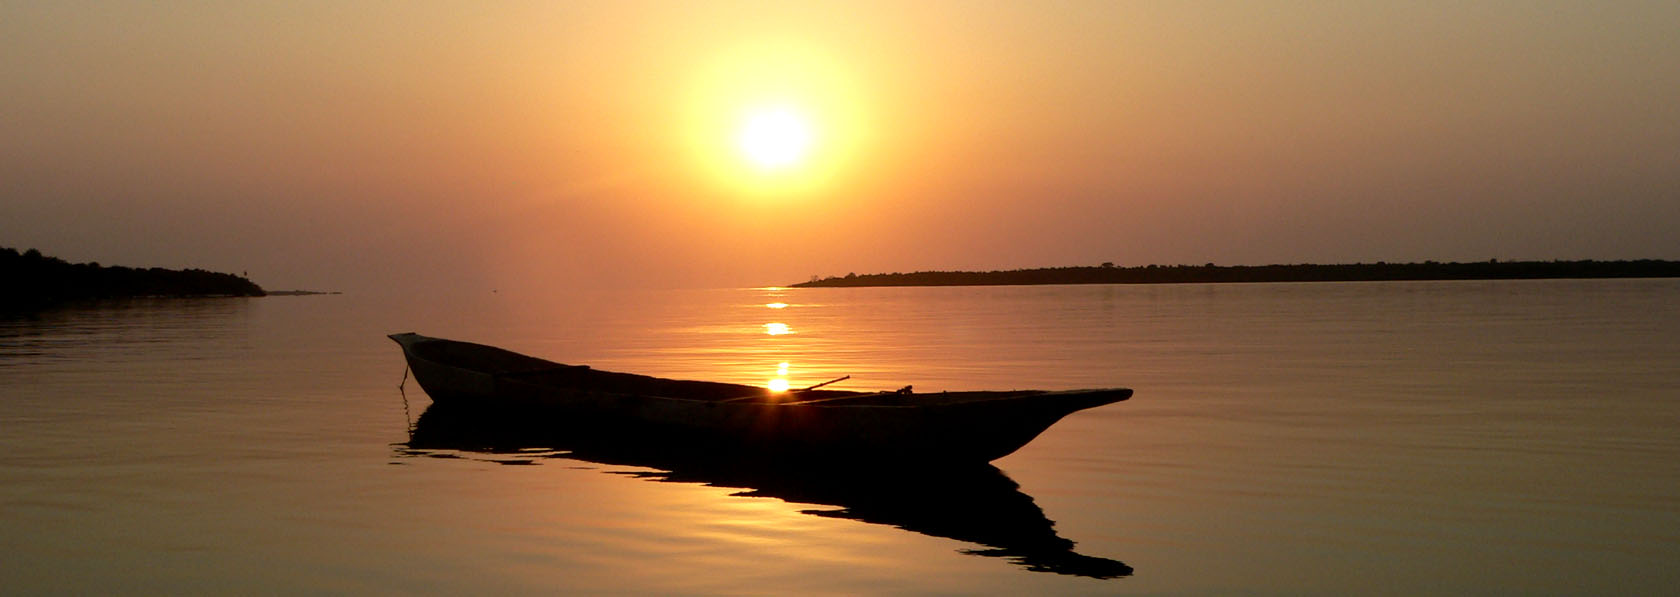 coucher de soleil sur la mer calme de l'archipel des bijagos